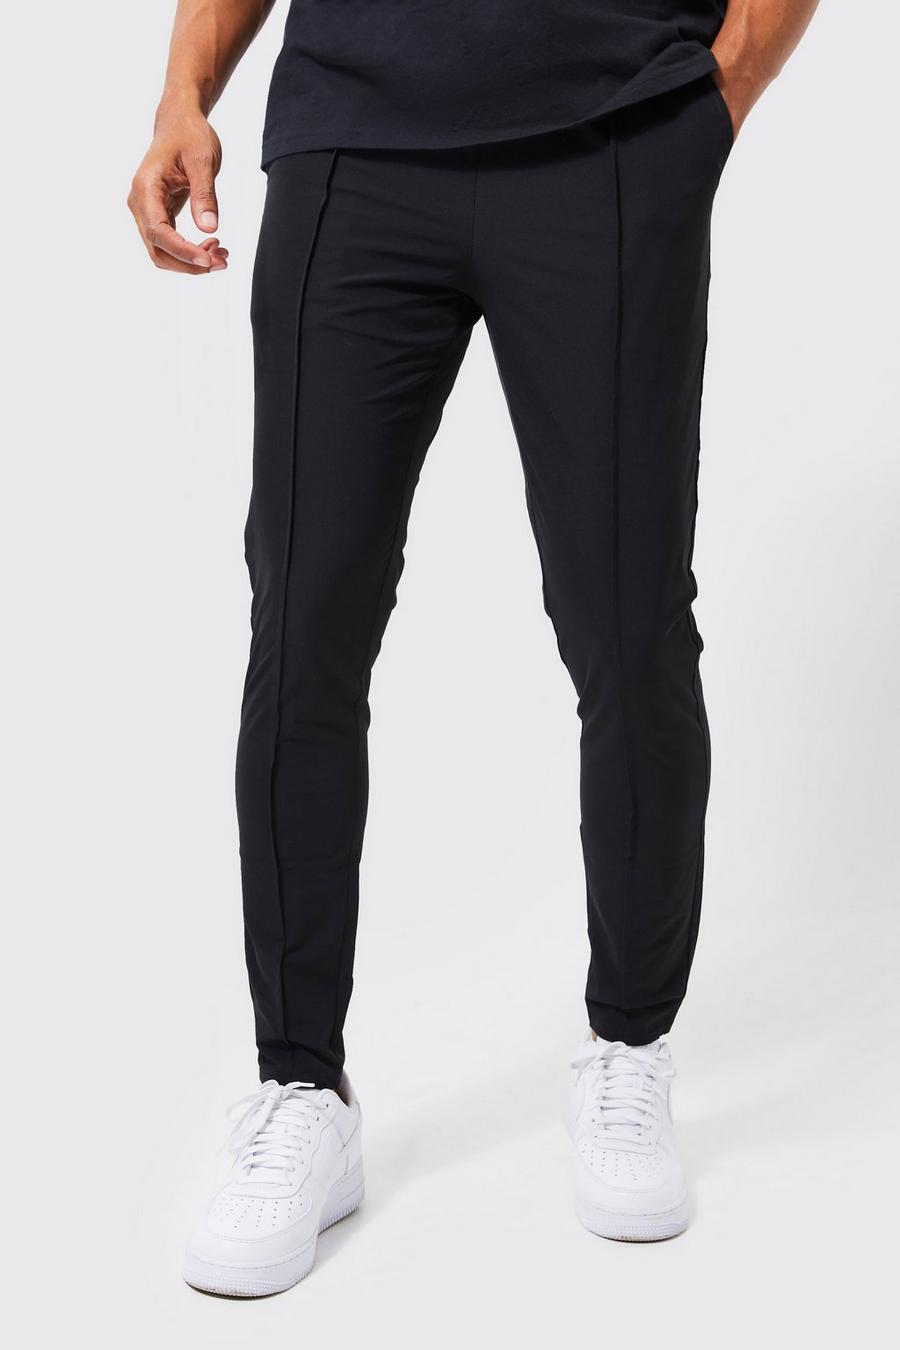 Black Elasticated Waist Skinny Stretch Golf Trousers